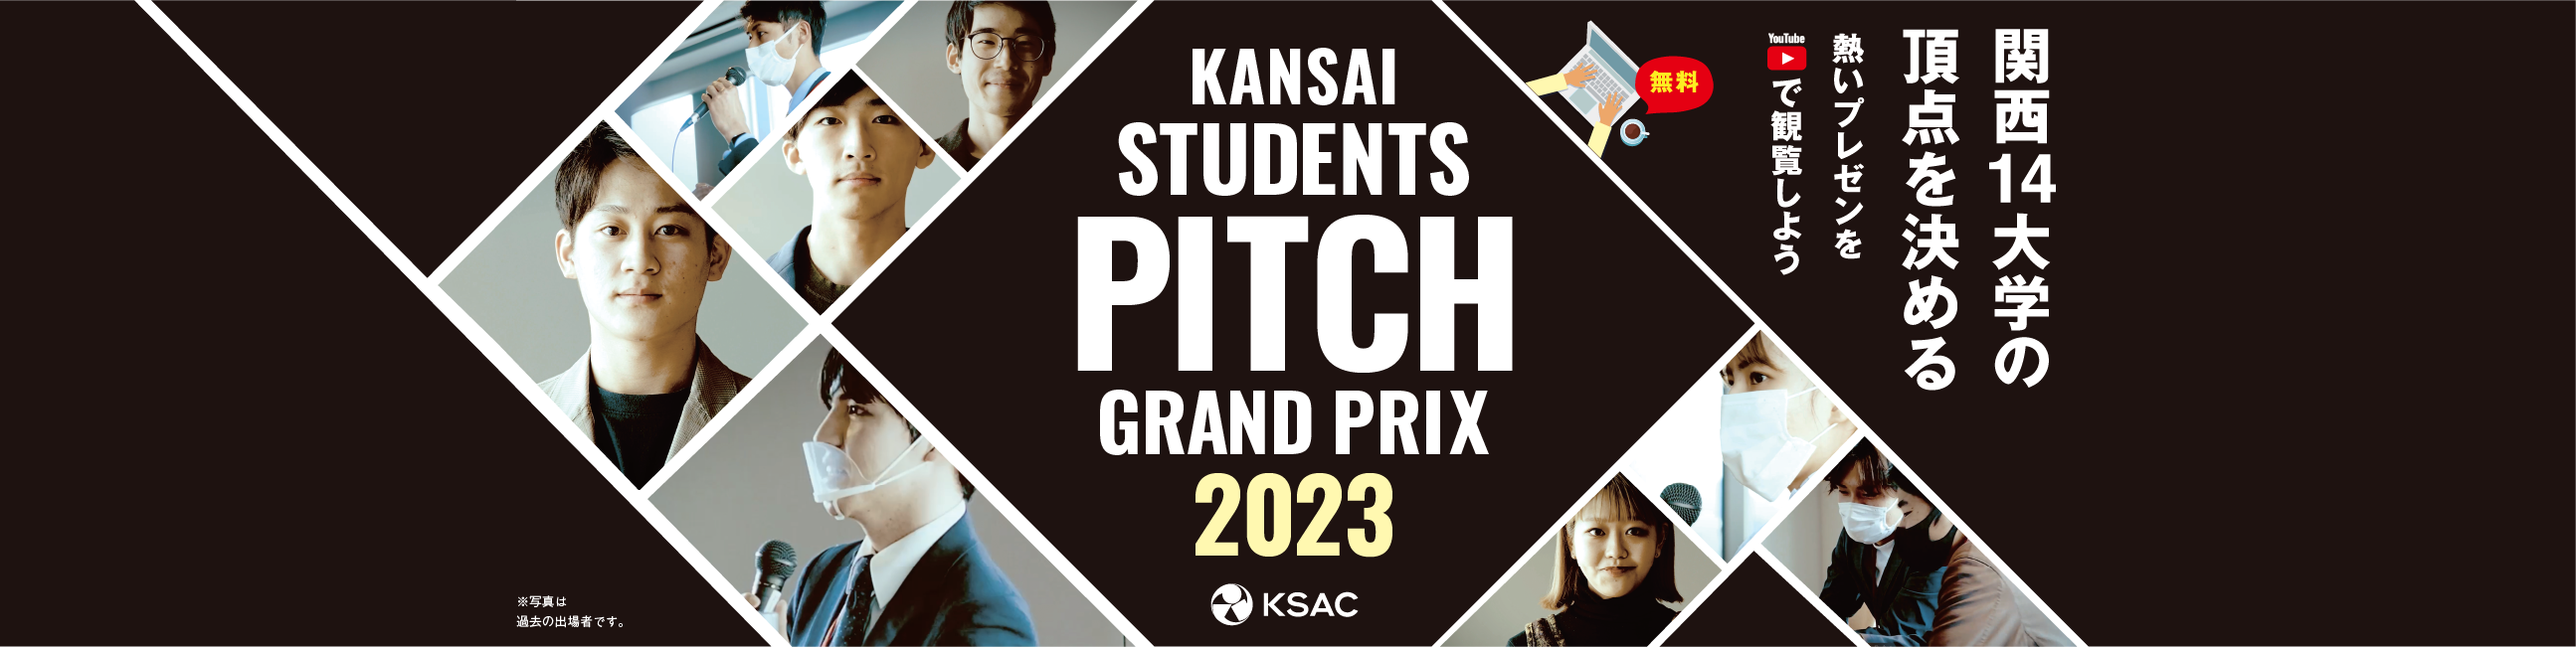 KANSAI STUDENT PITCH GRAND PRIX 2023